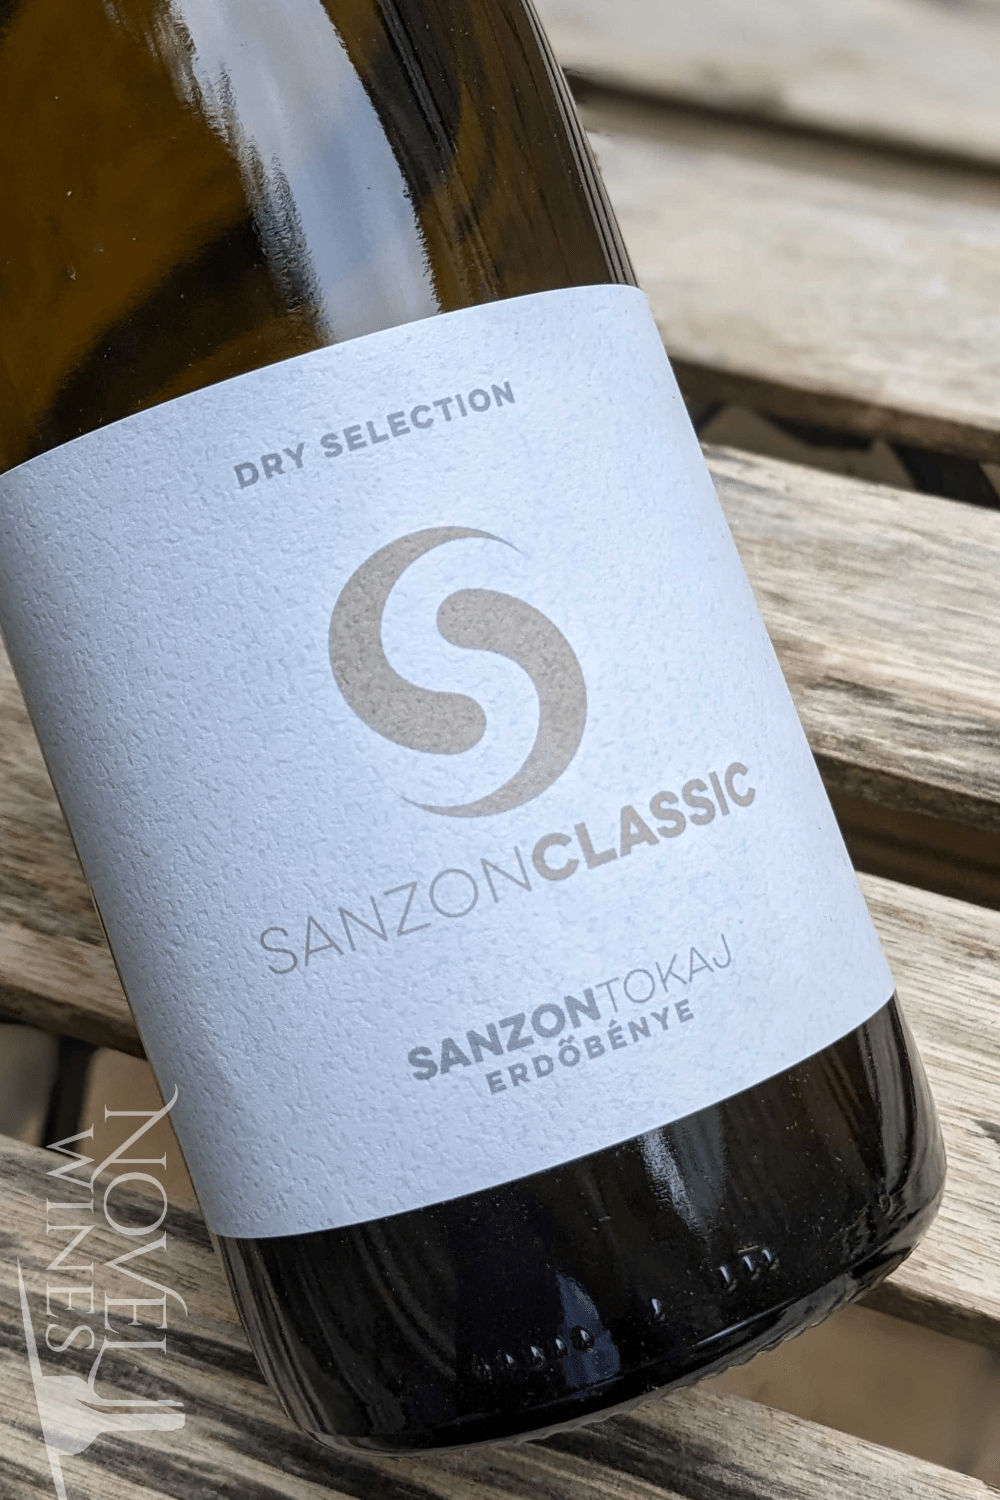 Sanzon Tokaj White Wine SanzonTokaj Classic Furmint 2018, Hungary